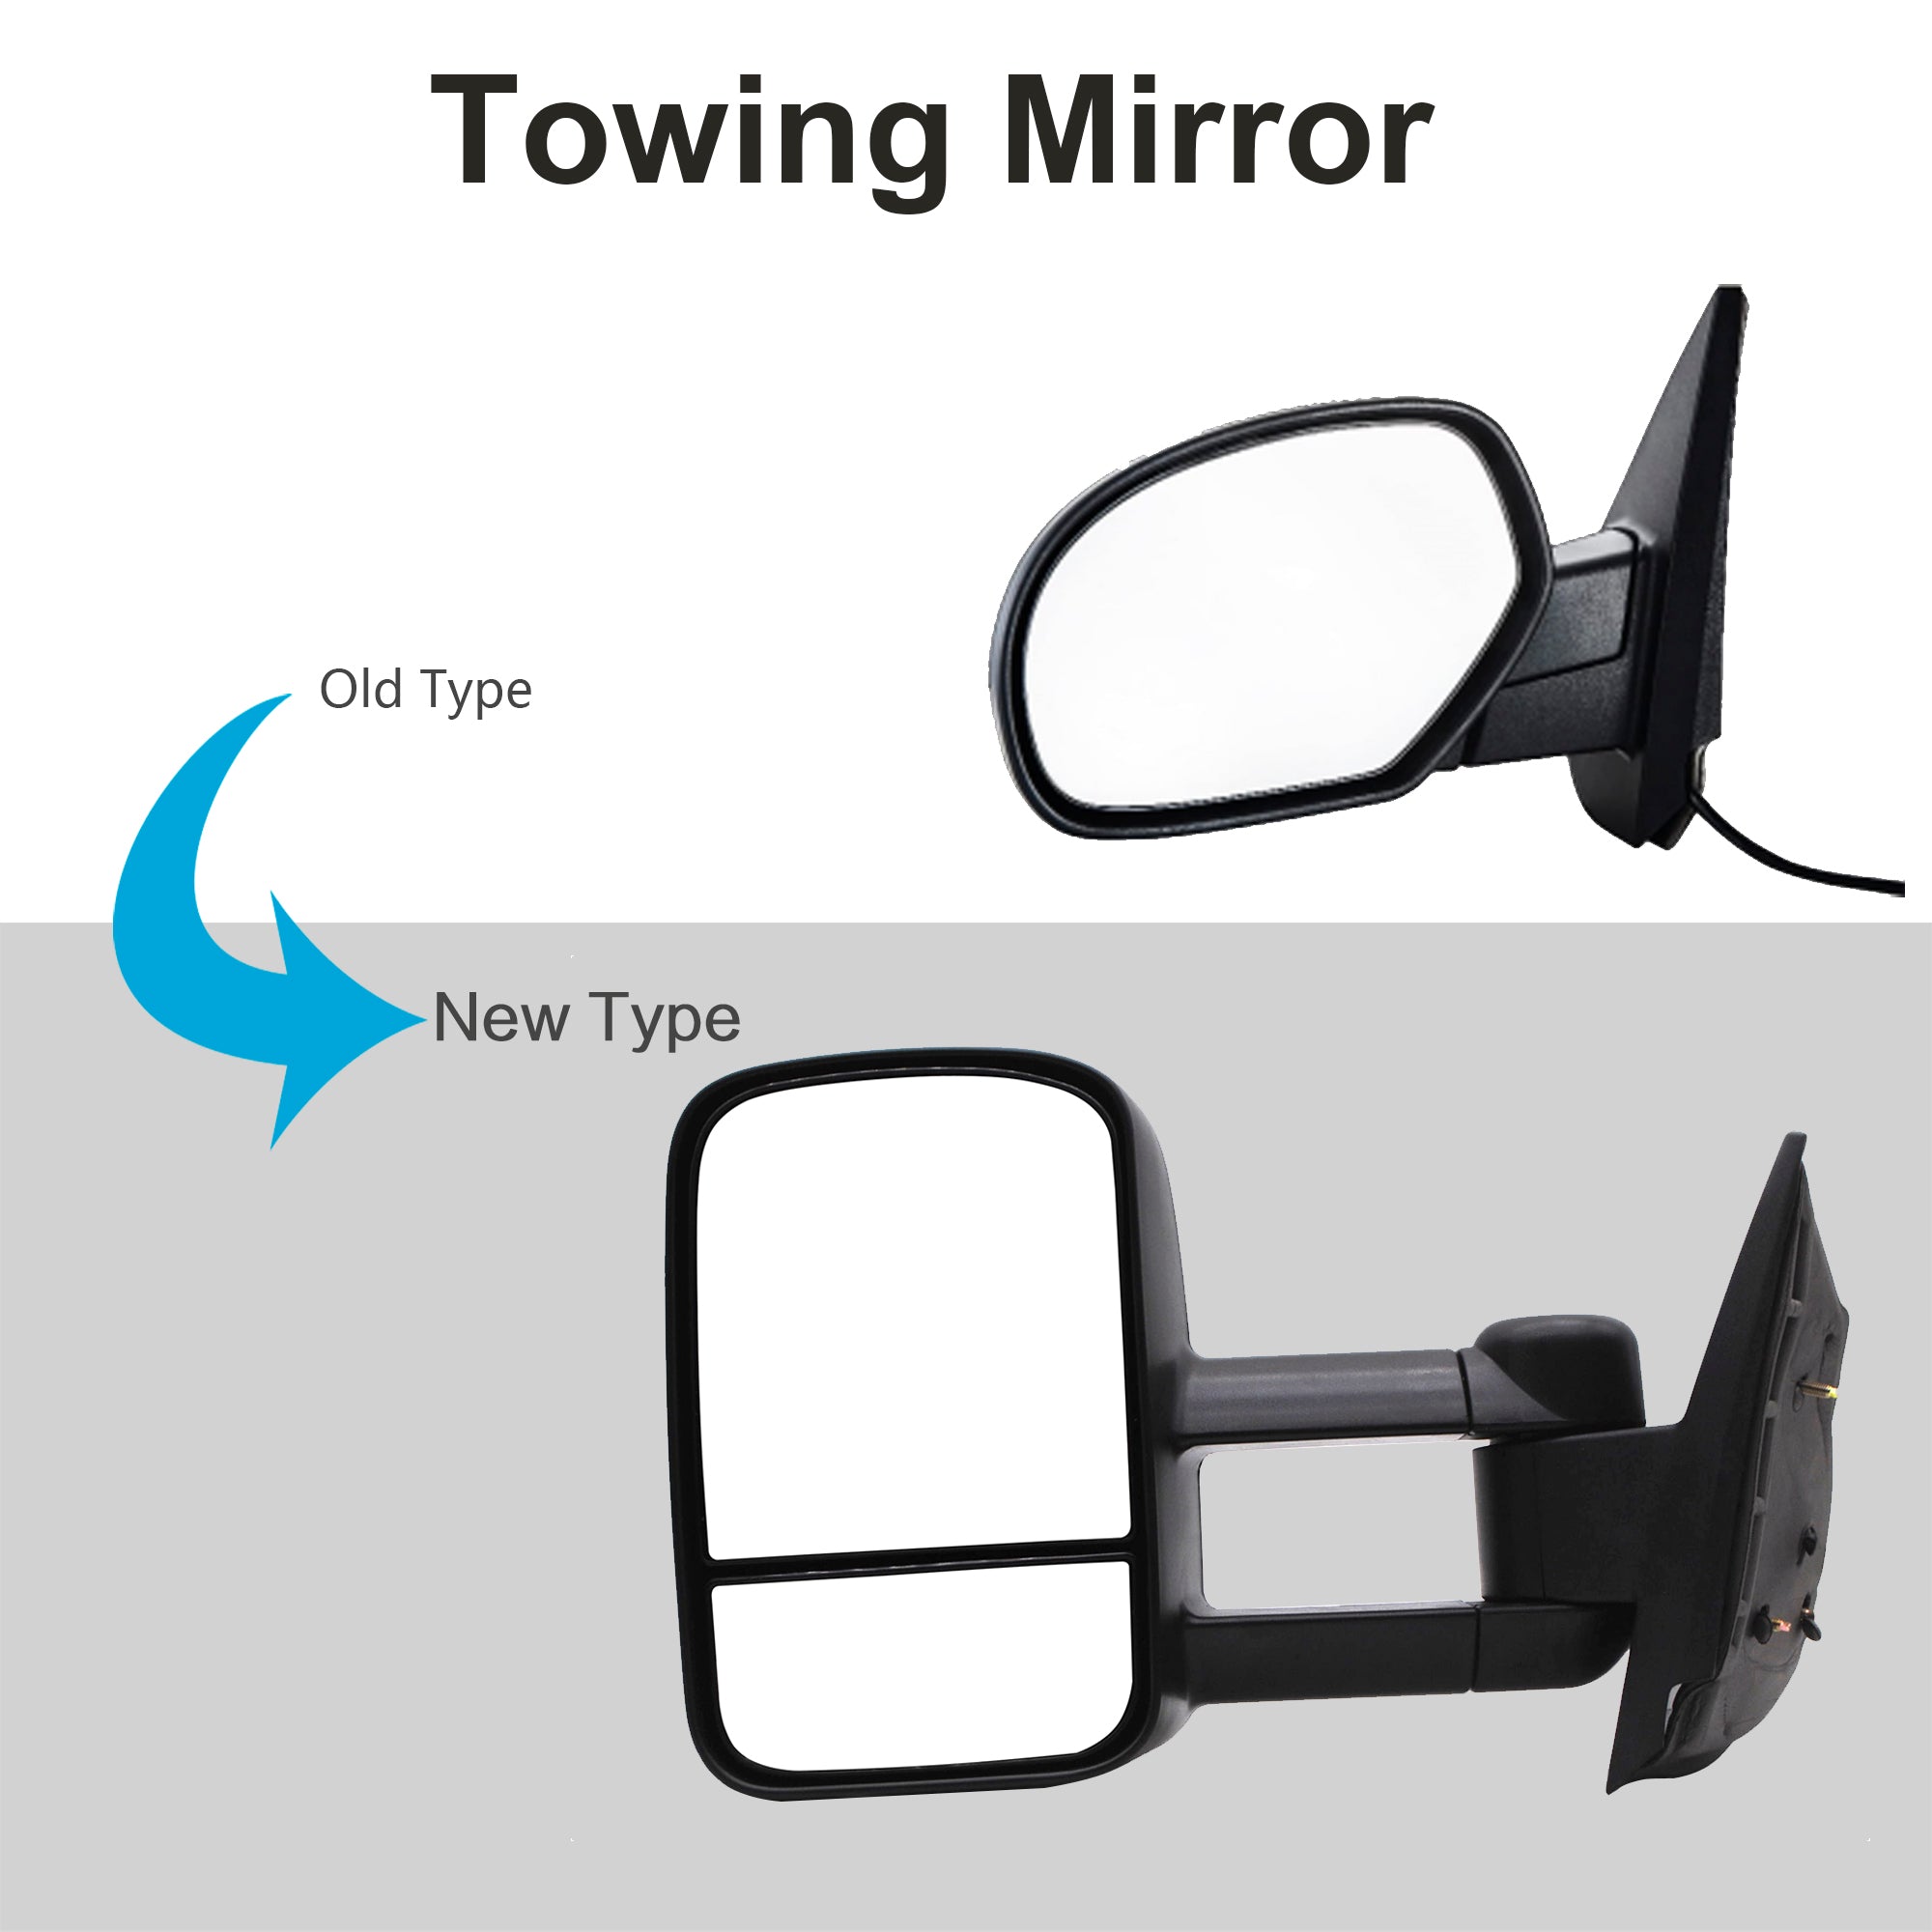 Towing Mirrors fit for 2007-2014 Chevy Silverado 1500 2500 3500 GMC Yukon Tahoe Manual Adjustment Manual Telescopic Folding Black Cap 24B